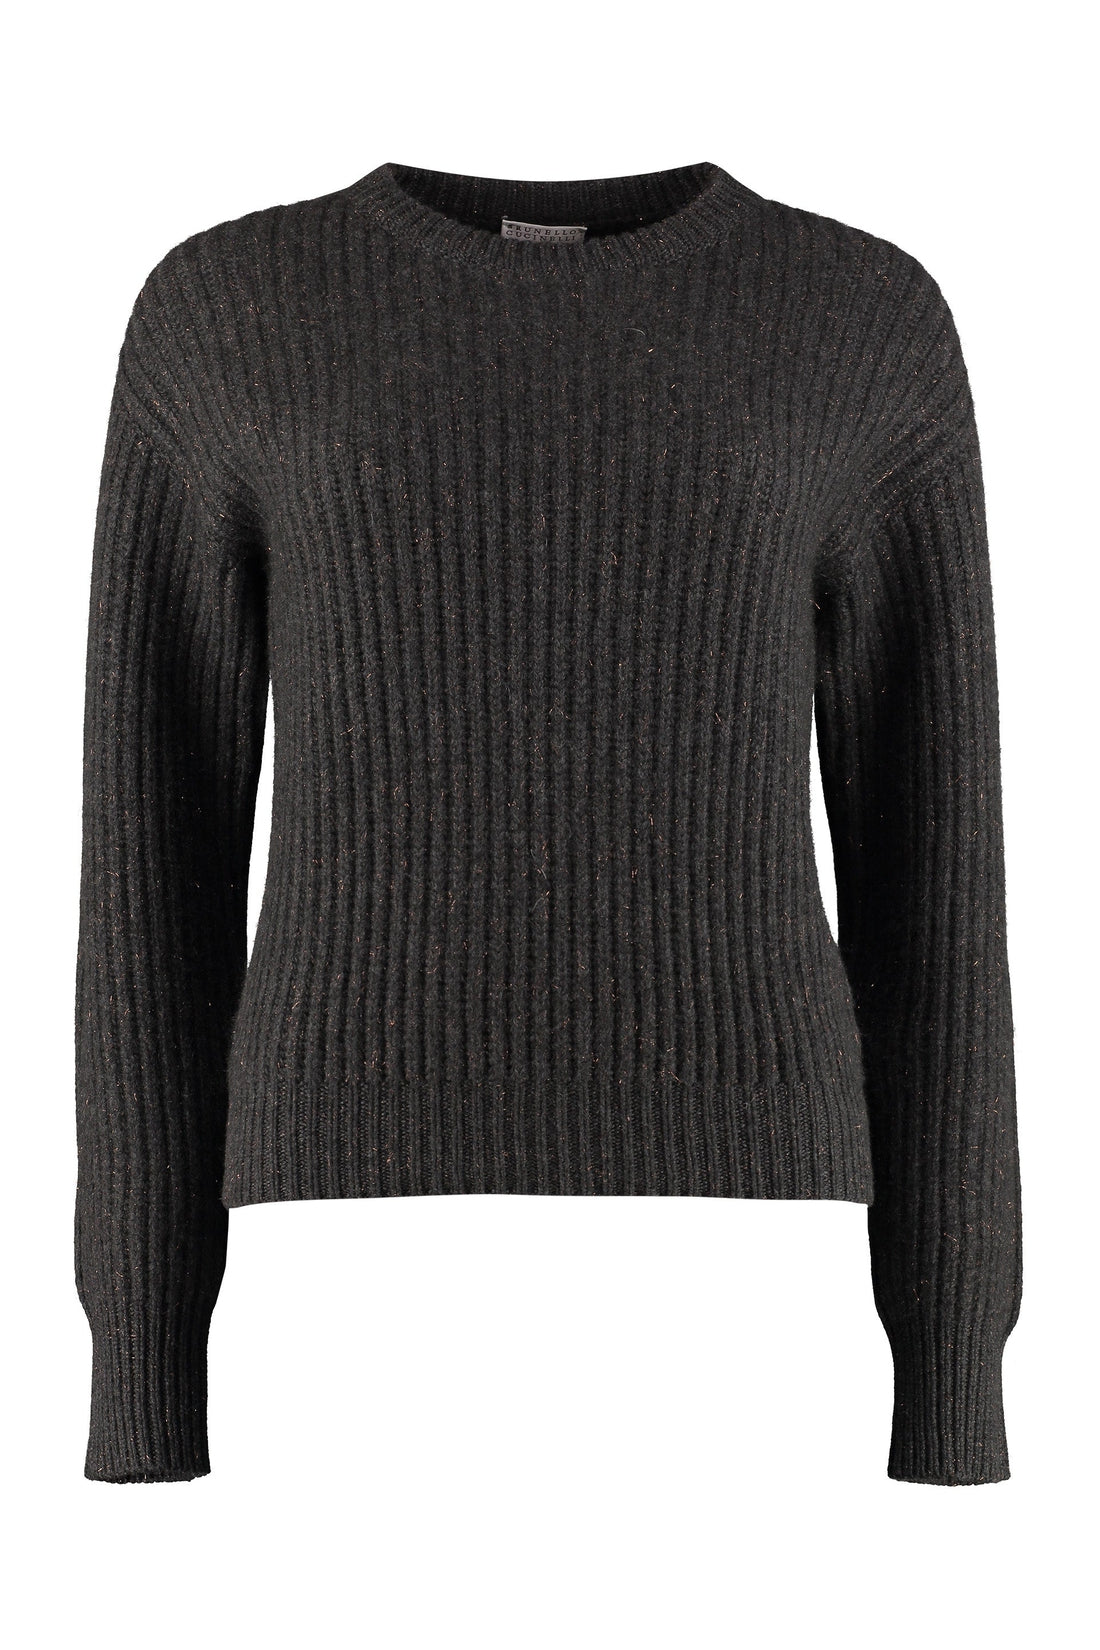 Brunello Cucinelli-OUTLET-SALE-Ribbed crewneck sweater-ARCHIVIST